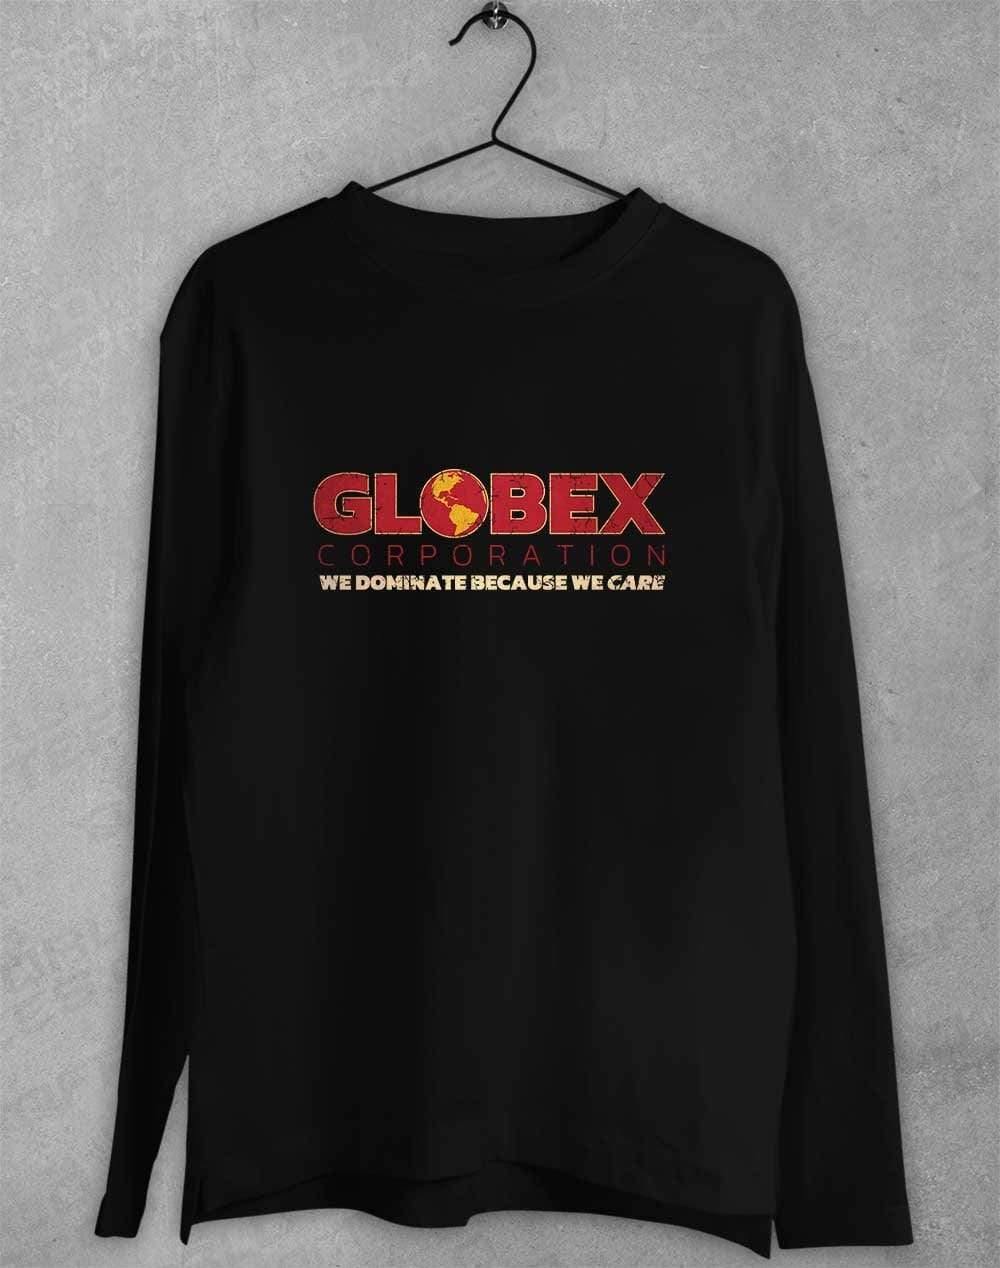 Globex Corporation Long Sleeve T-Shirt S / Black  - Off World Tees